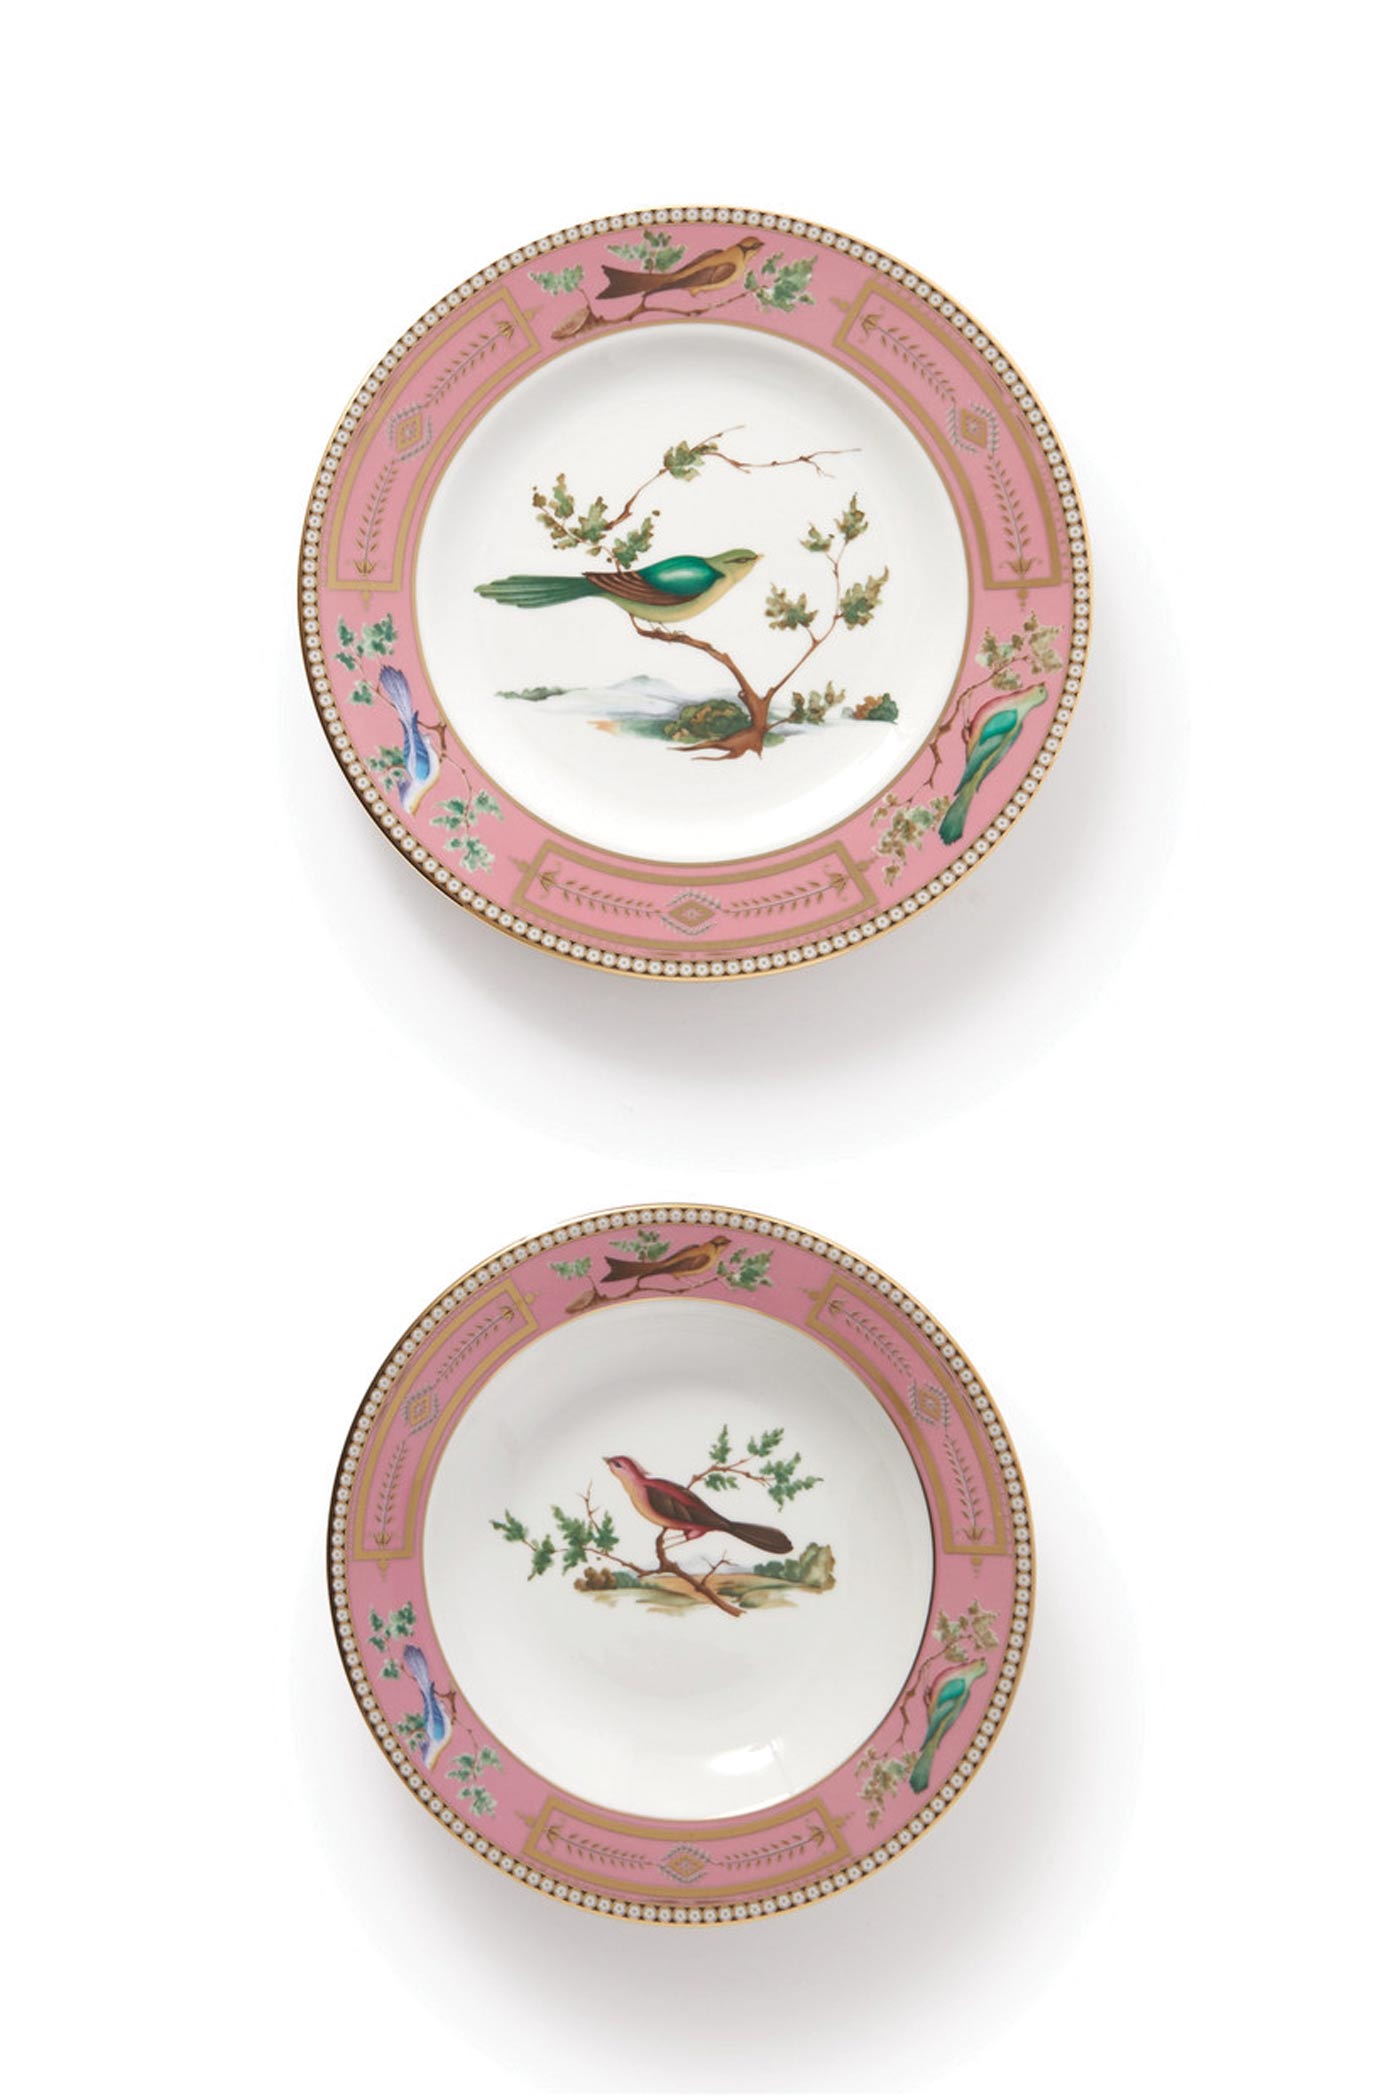 La Double J, Miniscalchi Gold Plated Porcelain Soup And Dinner Plate, Net A Porter